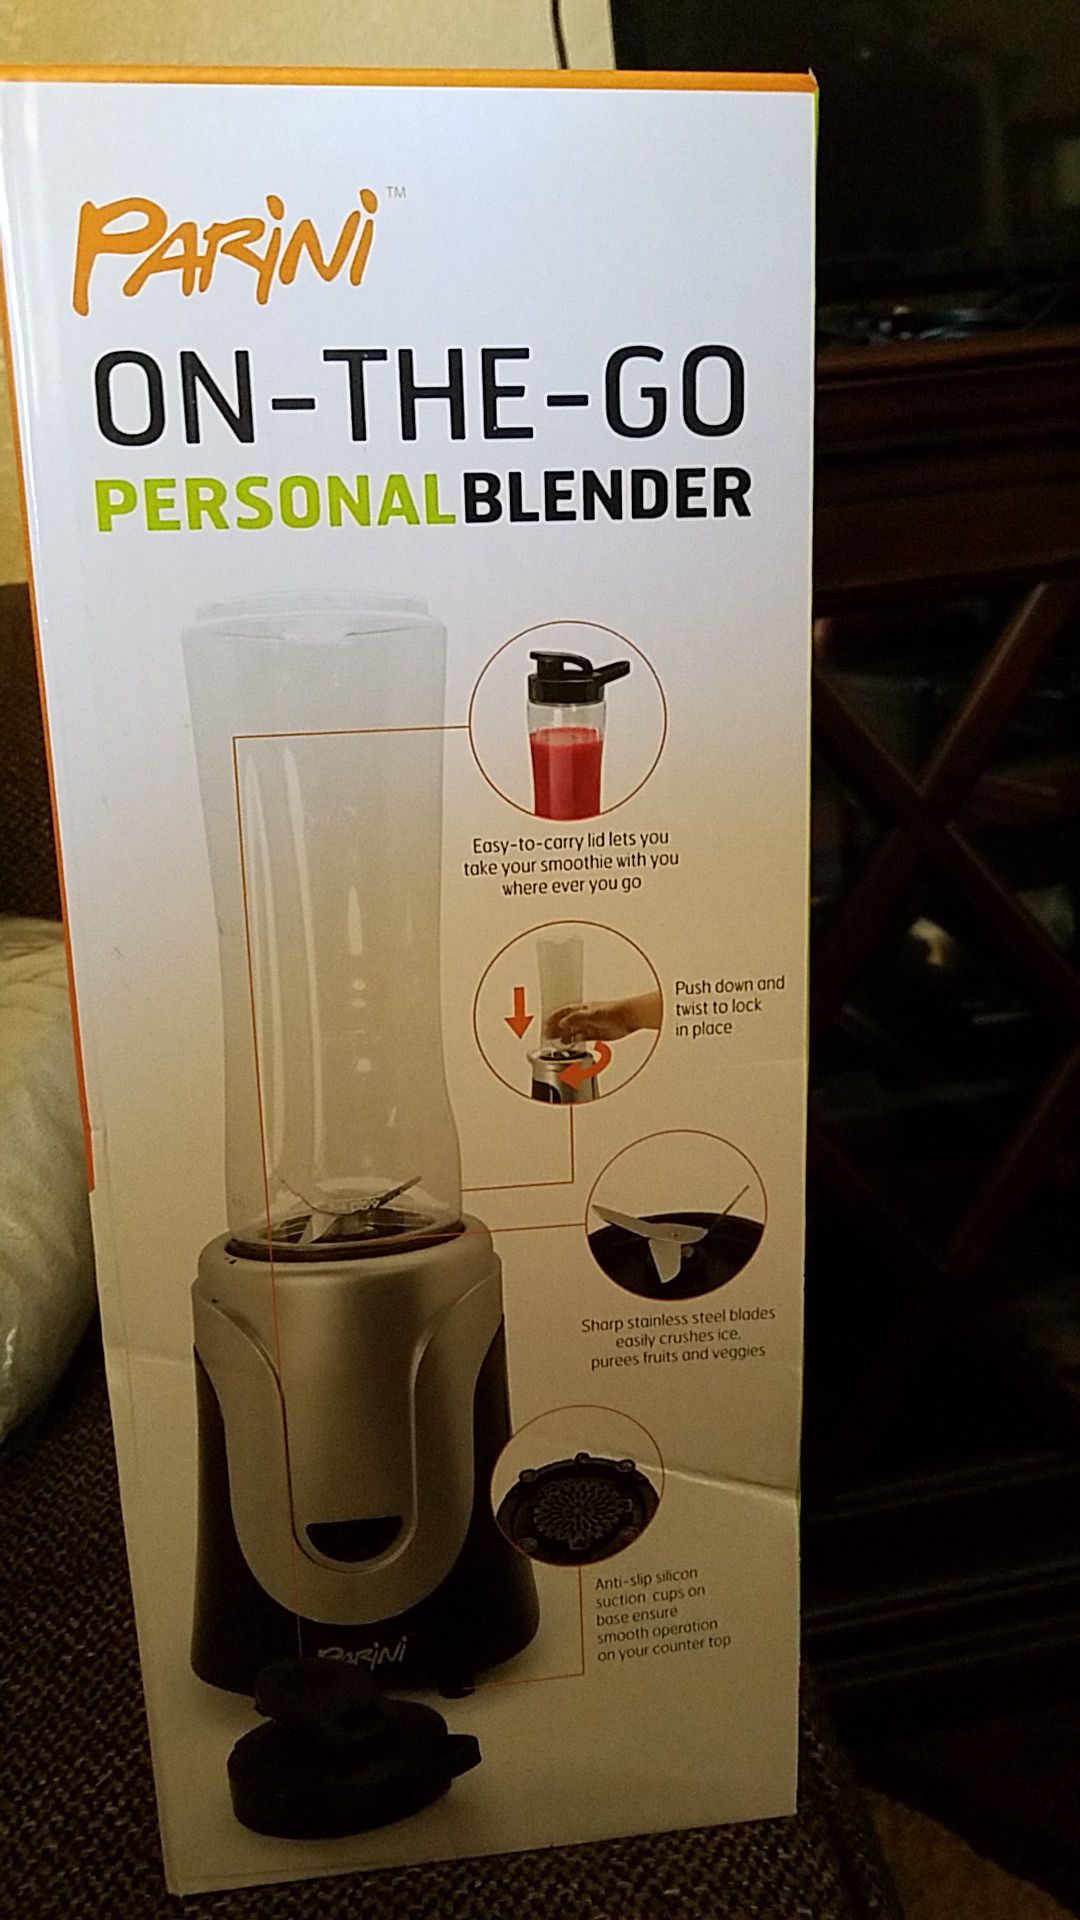 Personal blender